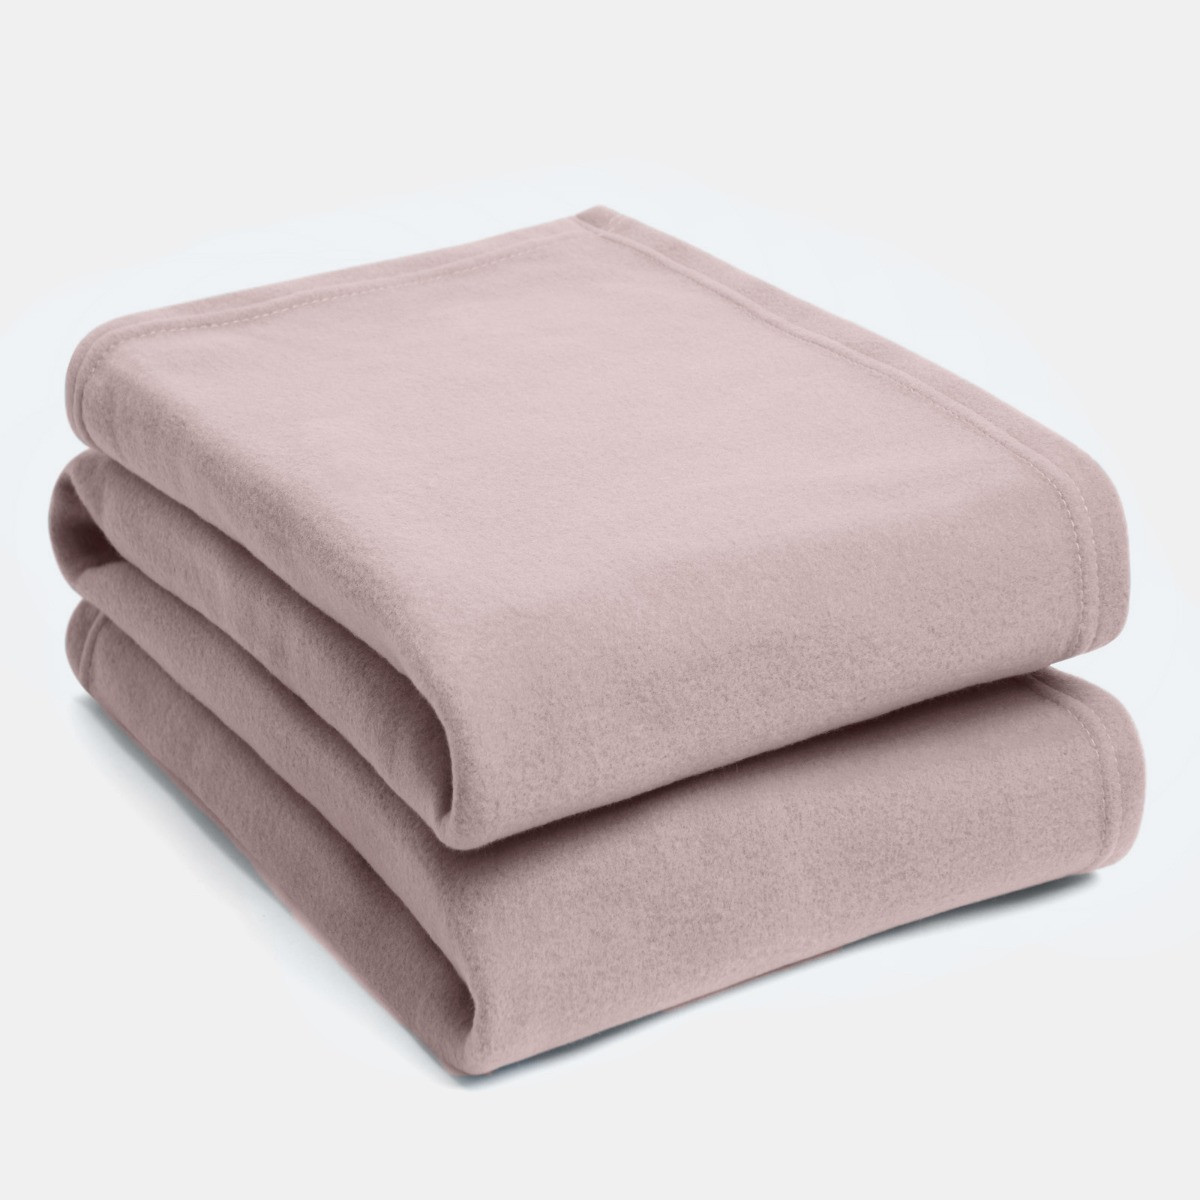 Dreamscene Plain Fleece Throw, Blush Pink - 150 x 200cm>